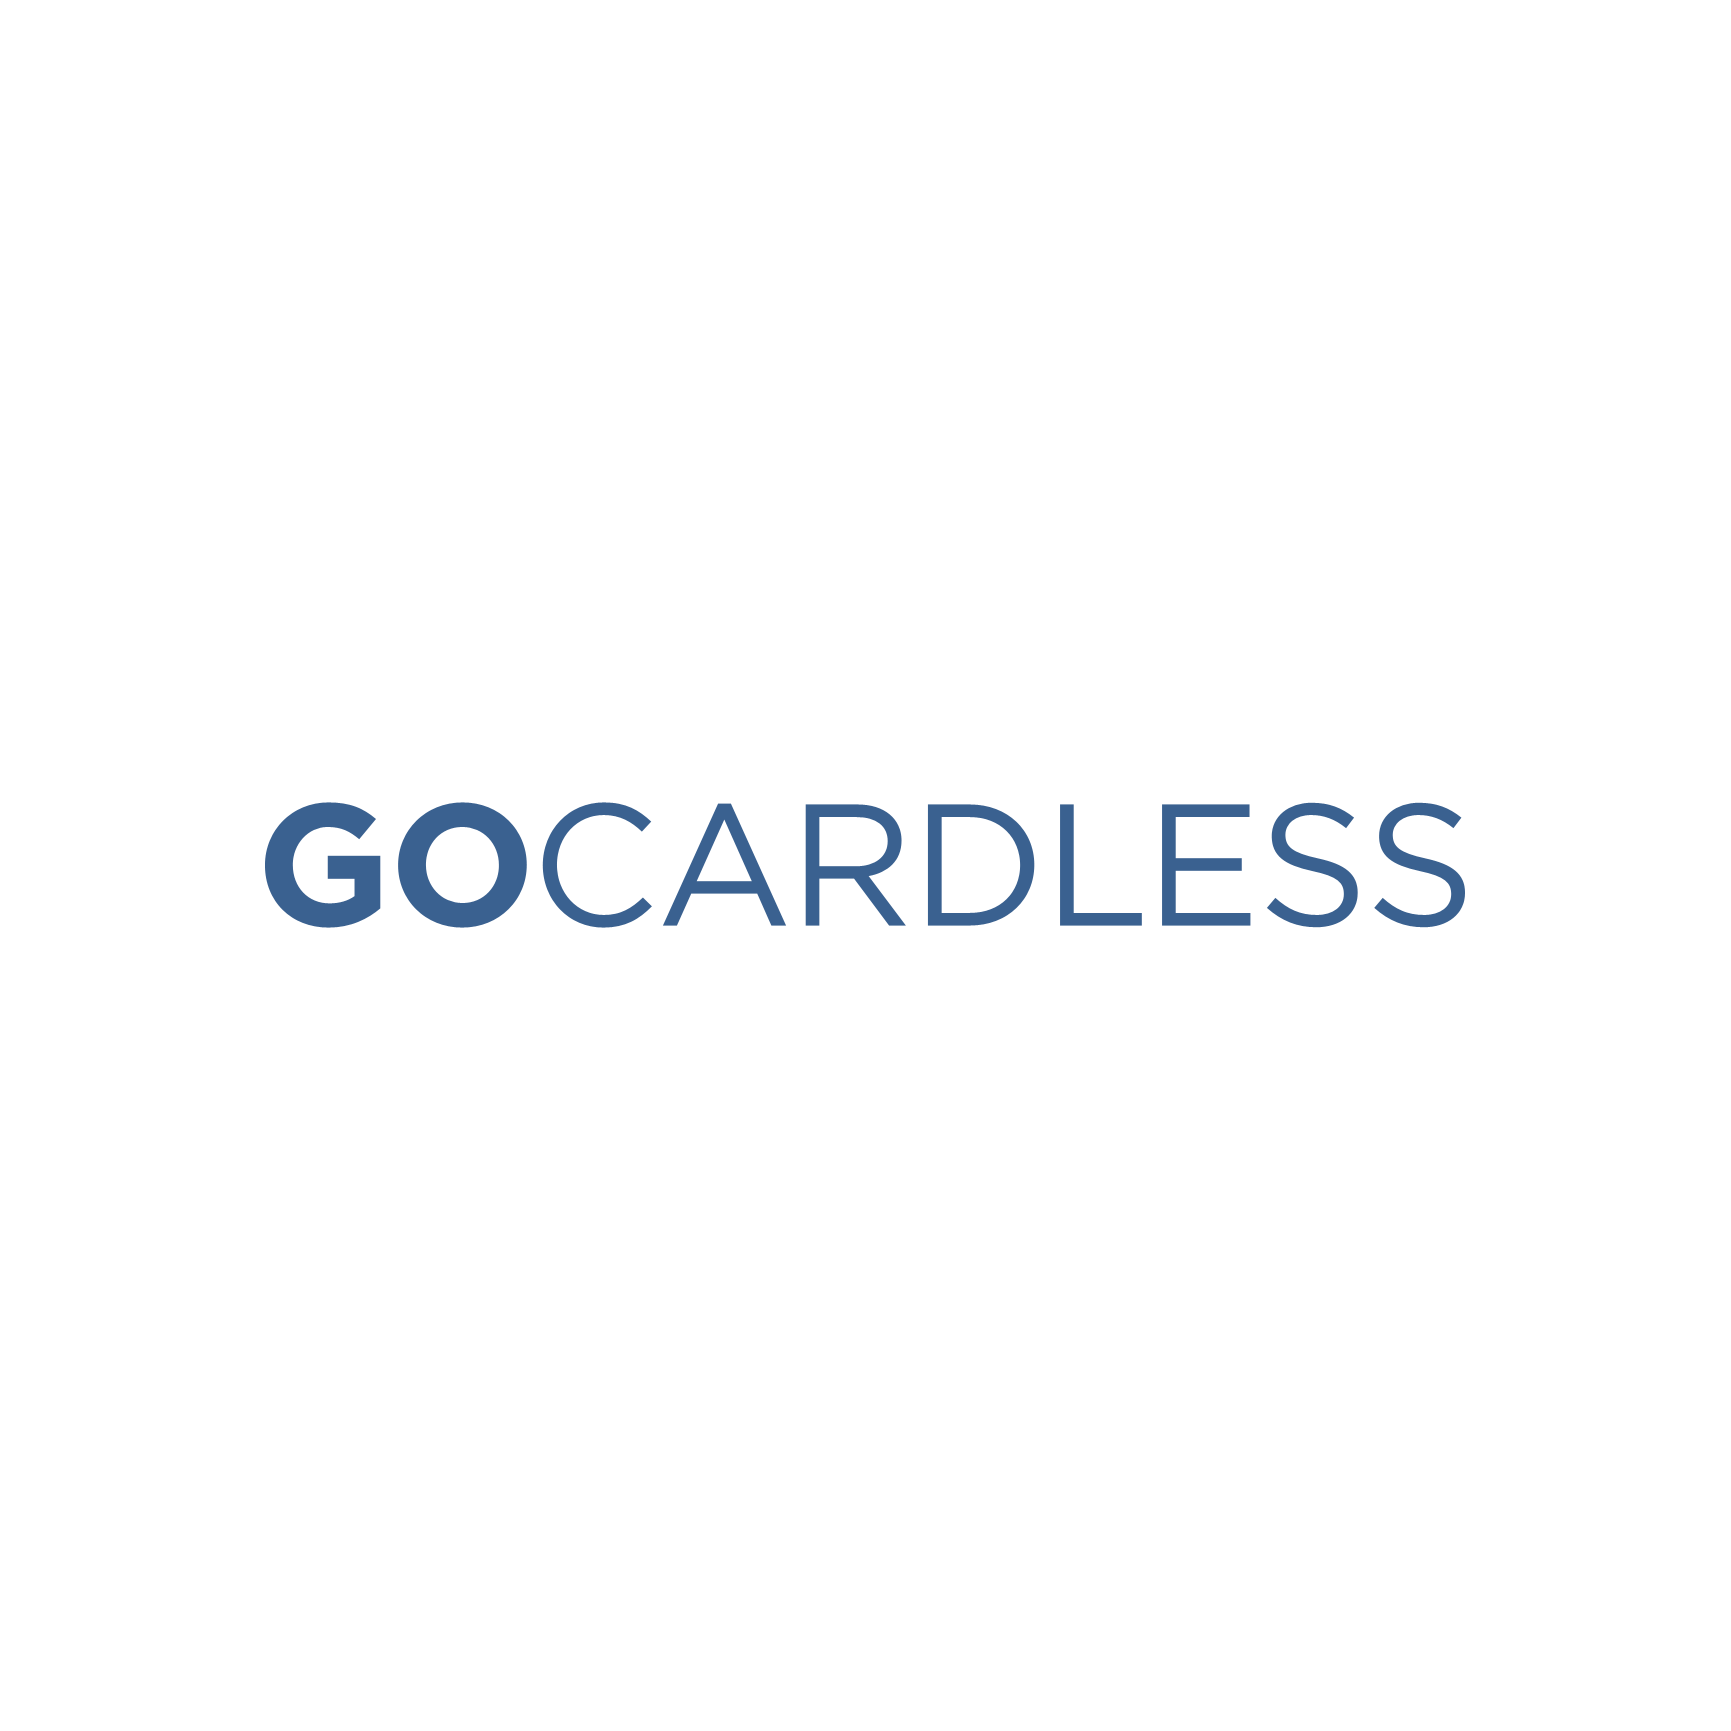 Gocardless